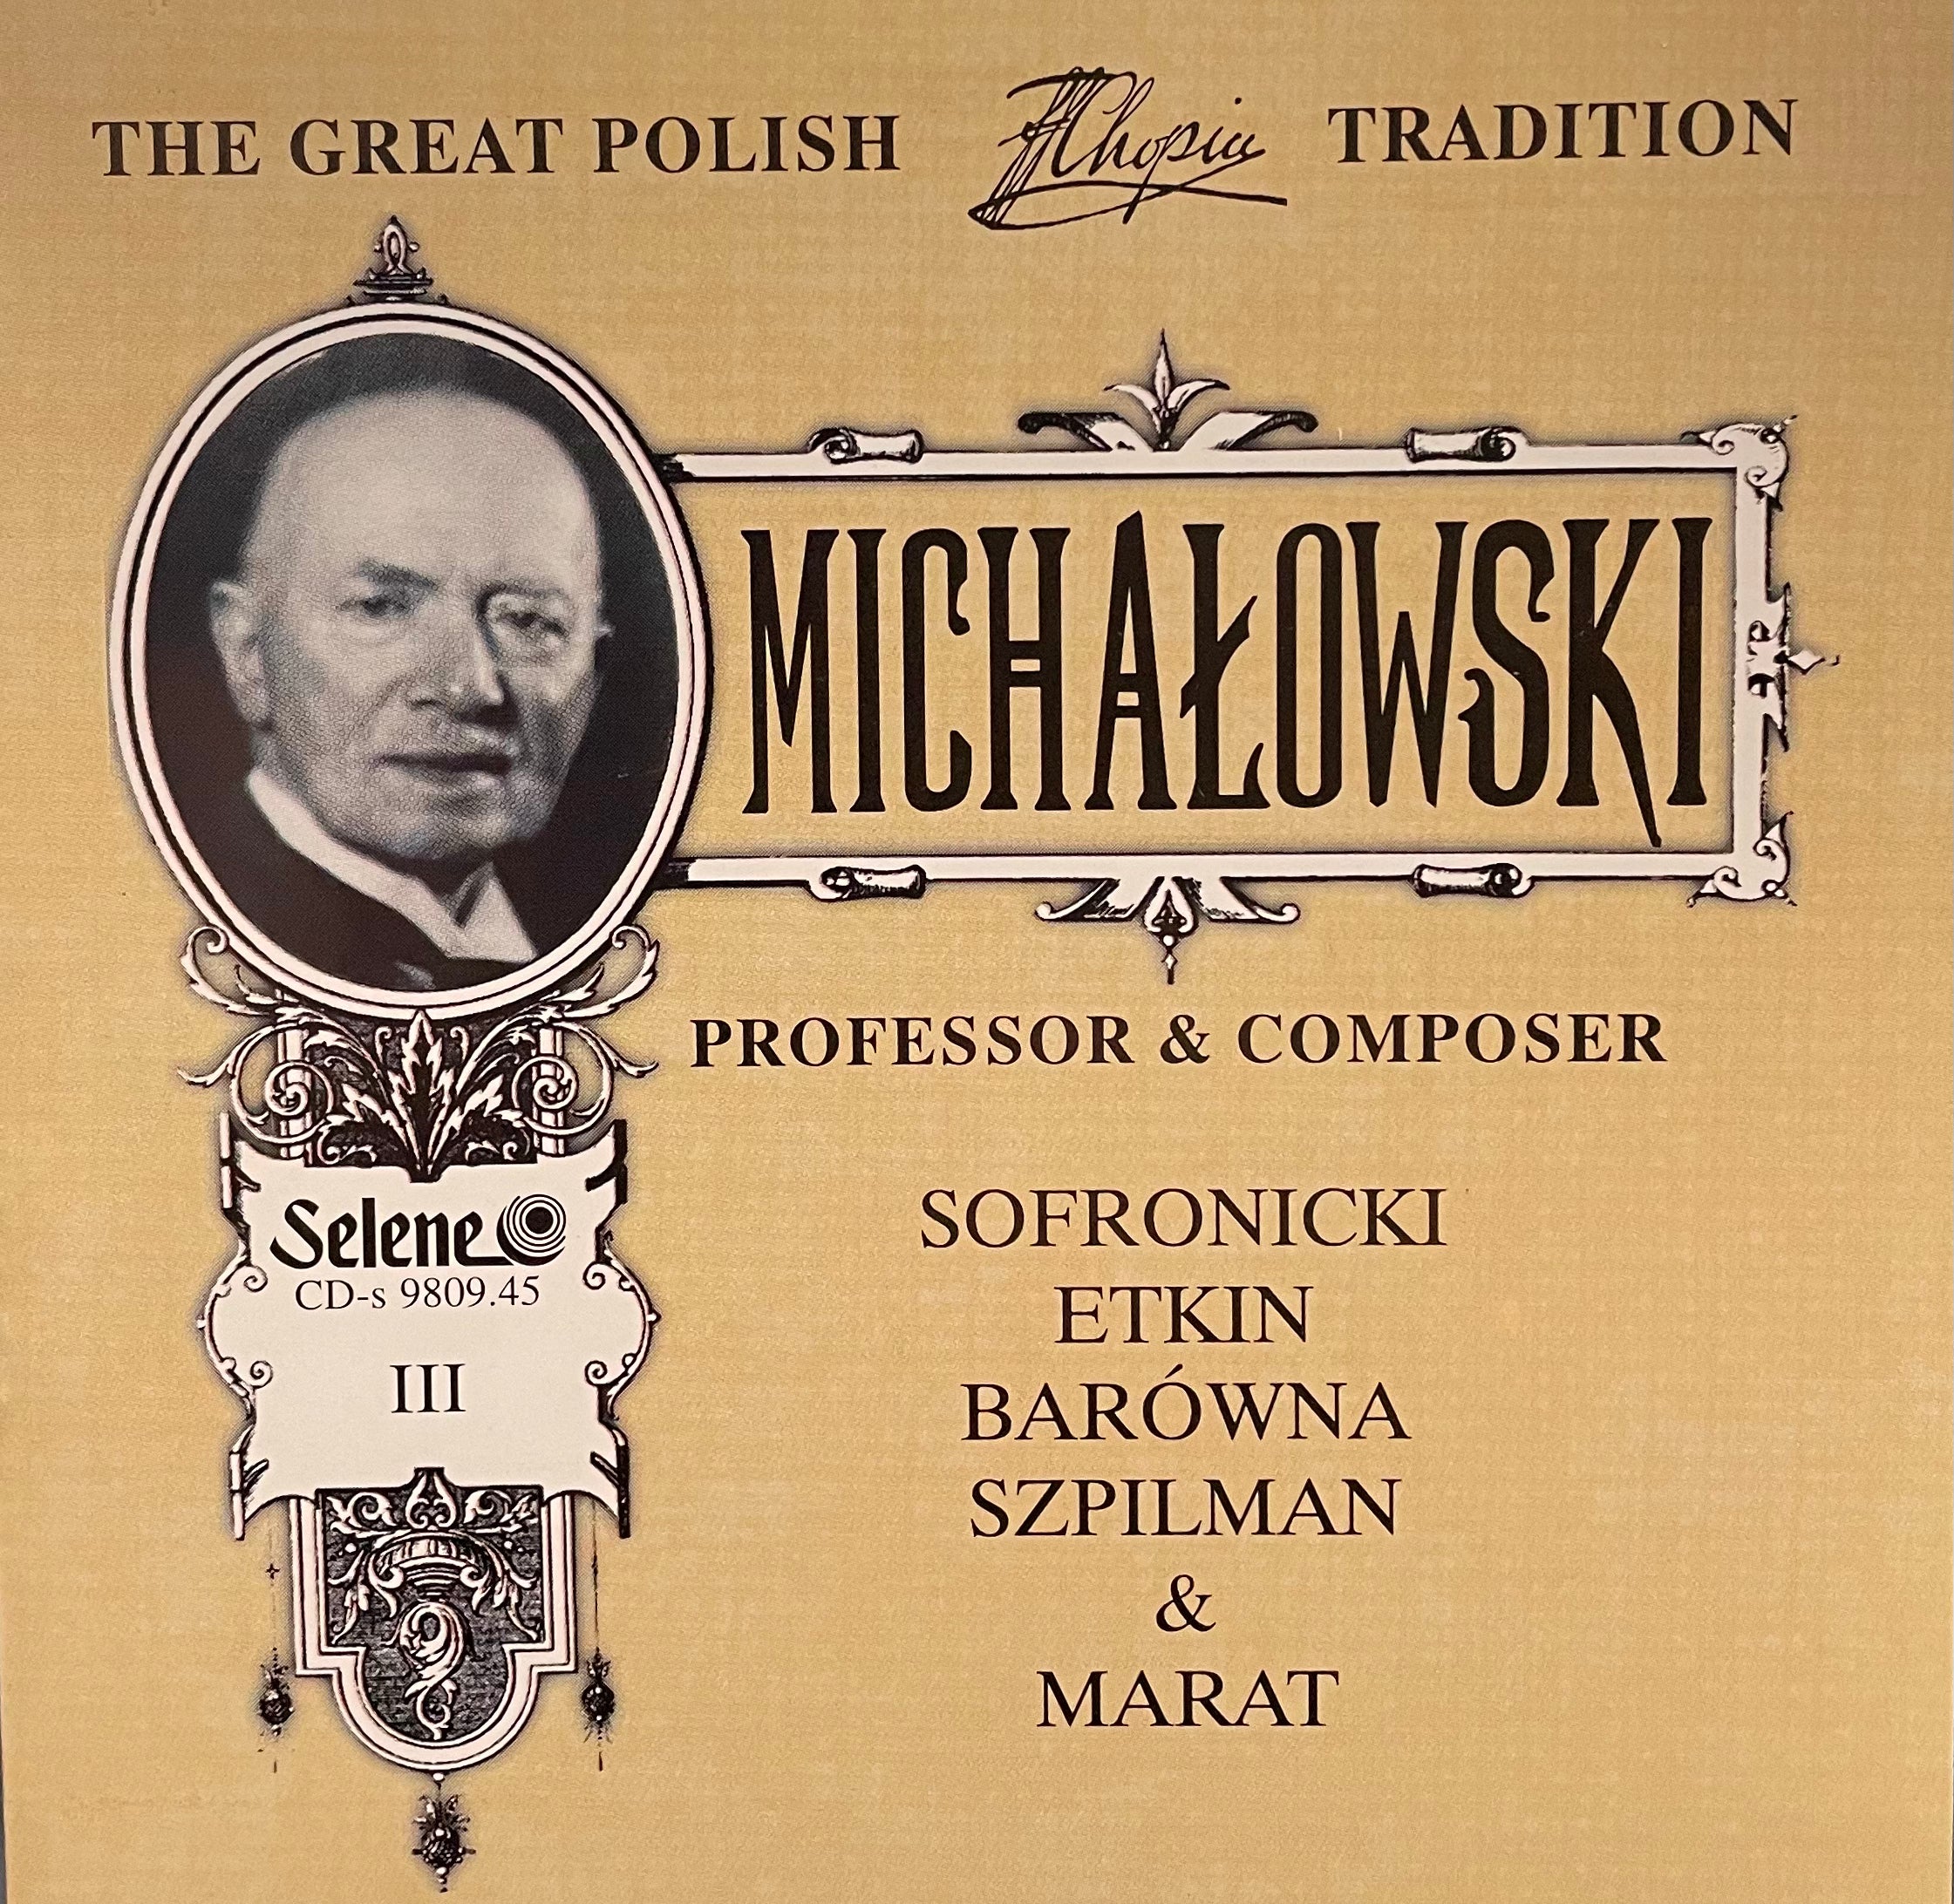 The Great Polish Chopin Tradition - Michalowski Vol. 3